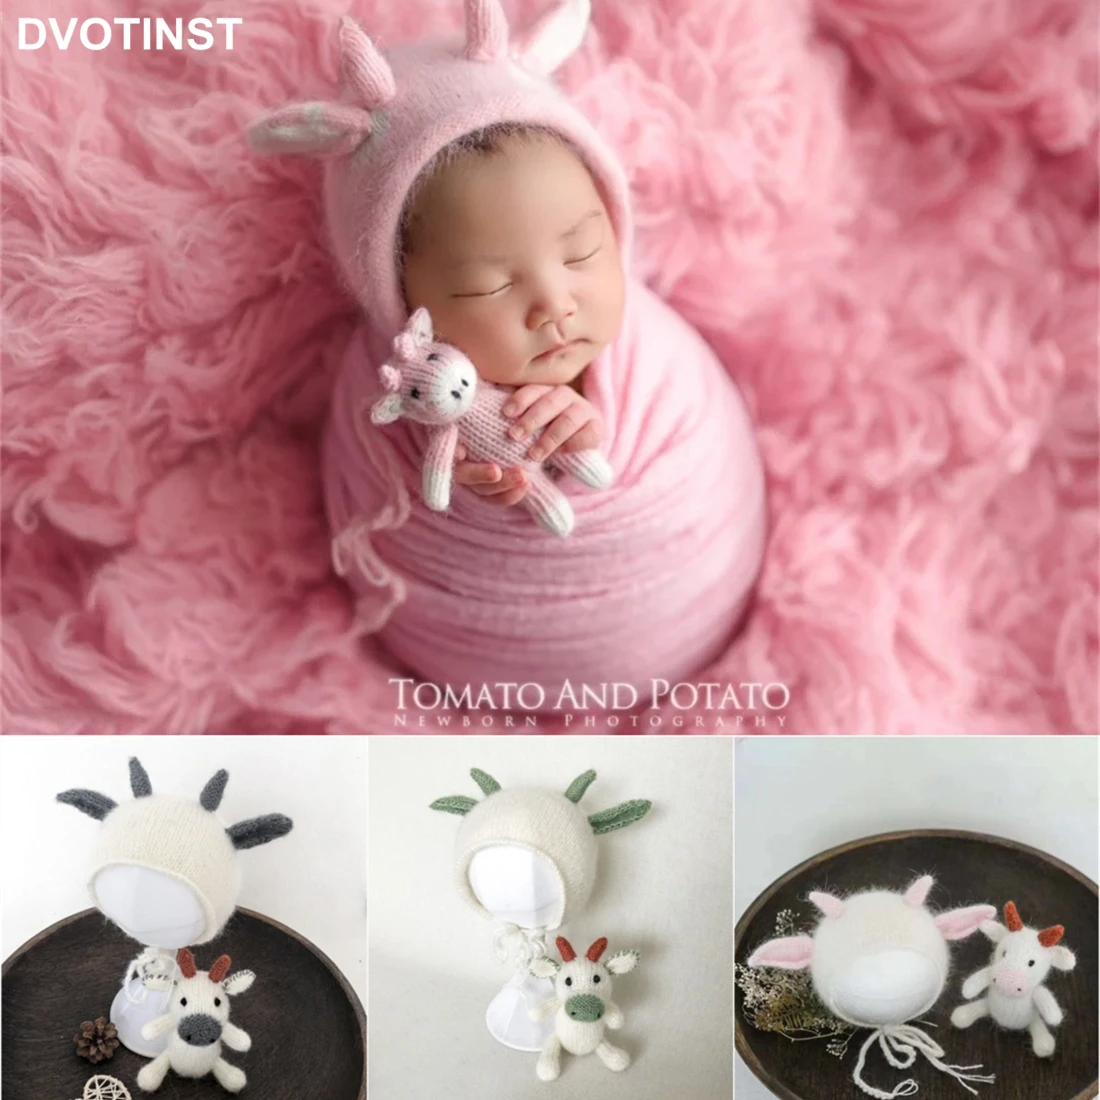 Dvotinst Newborn Baby Photography Props Knitted Crochet Cute Cow Ox Doll Hat Bonnet 2pcs Fotografia Studio Shoots Photo Props